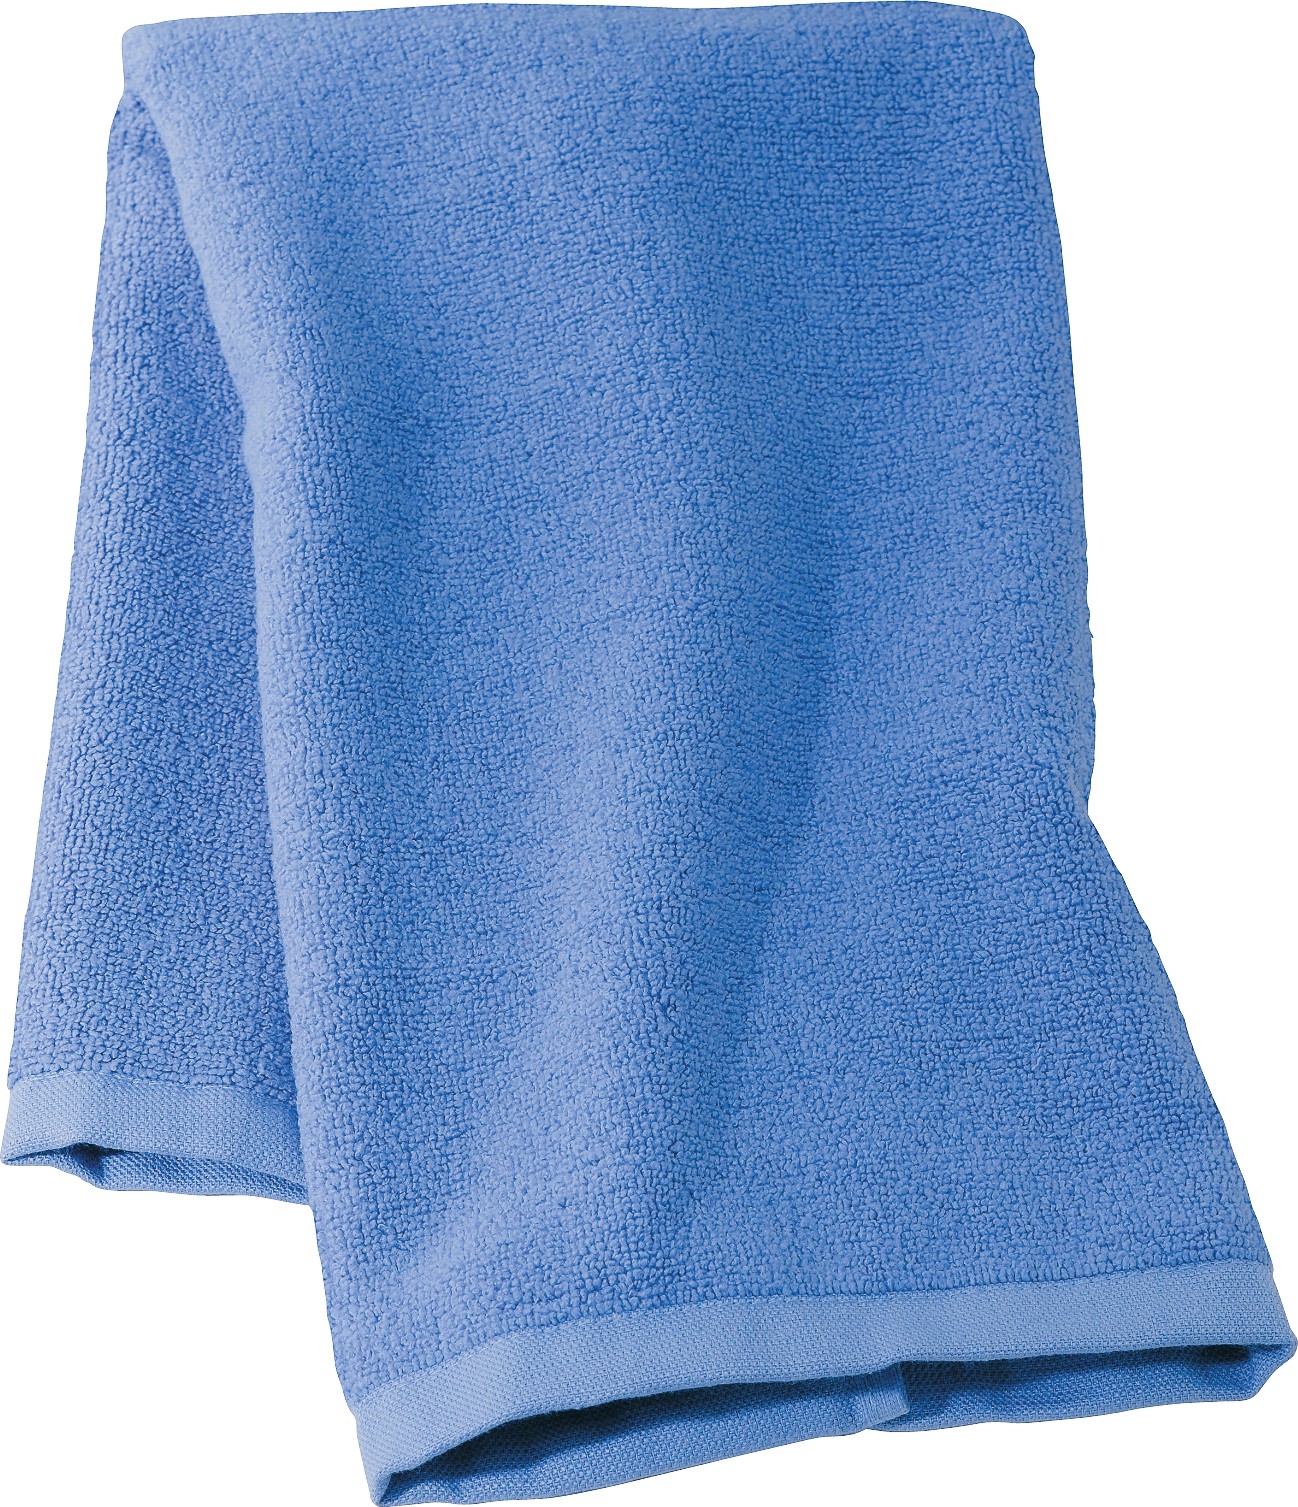 Home   Garden   Bath   Towels   Washcloths